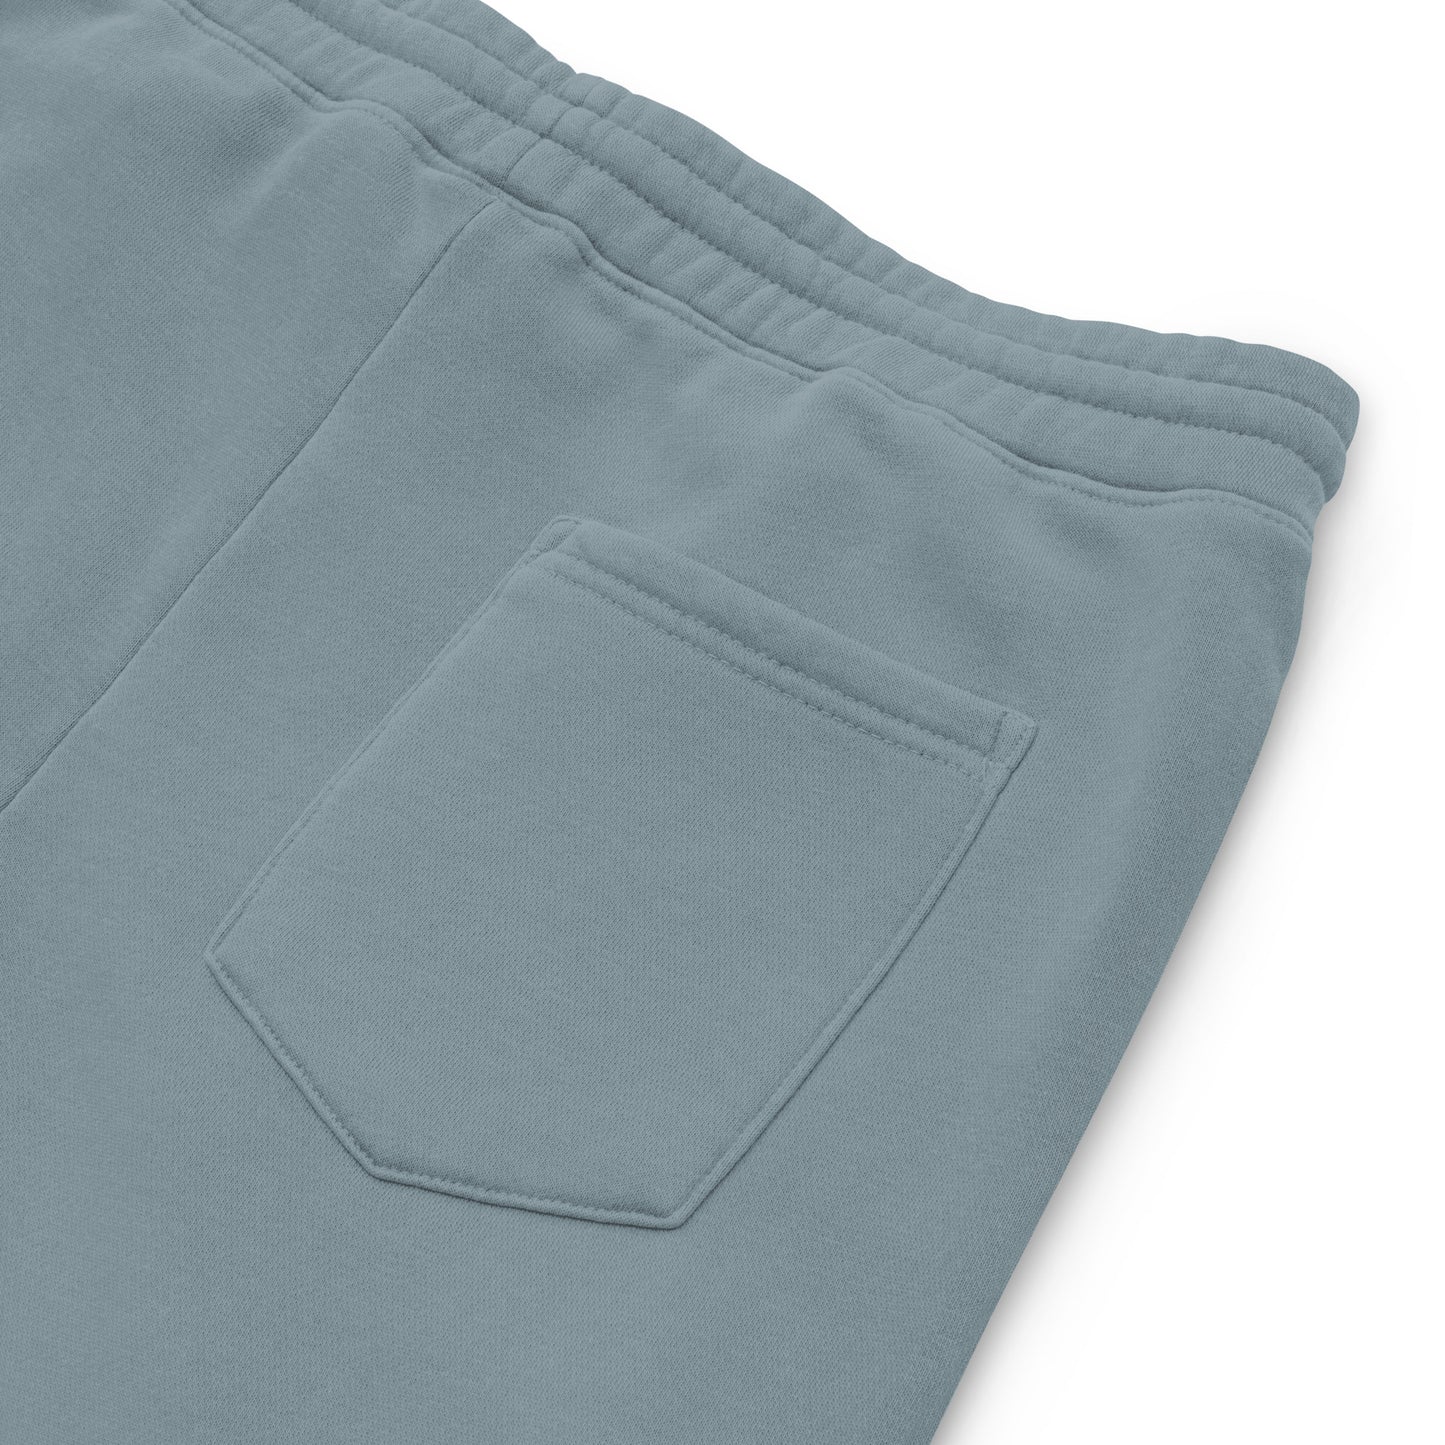 New York City - Unisex pigment-dyed sweatpants